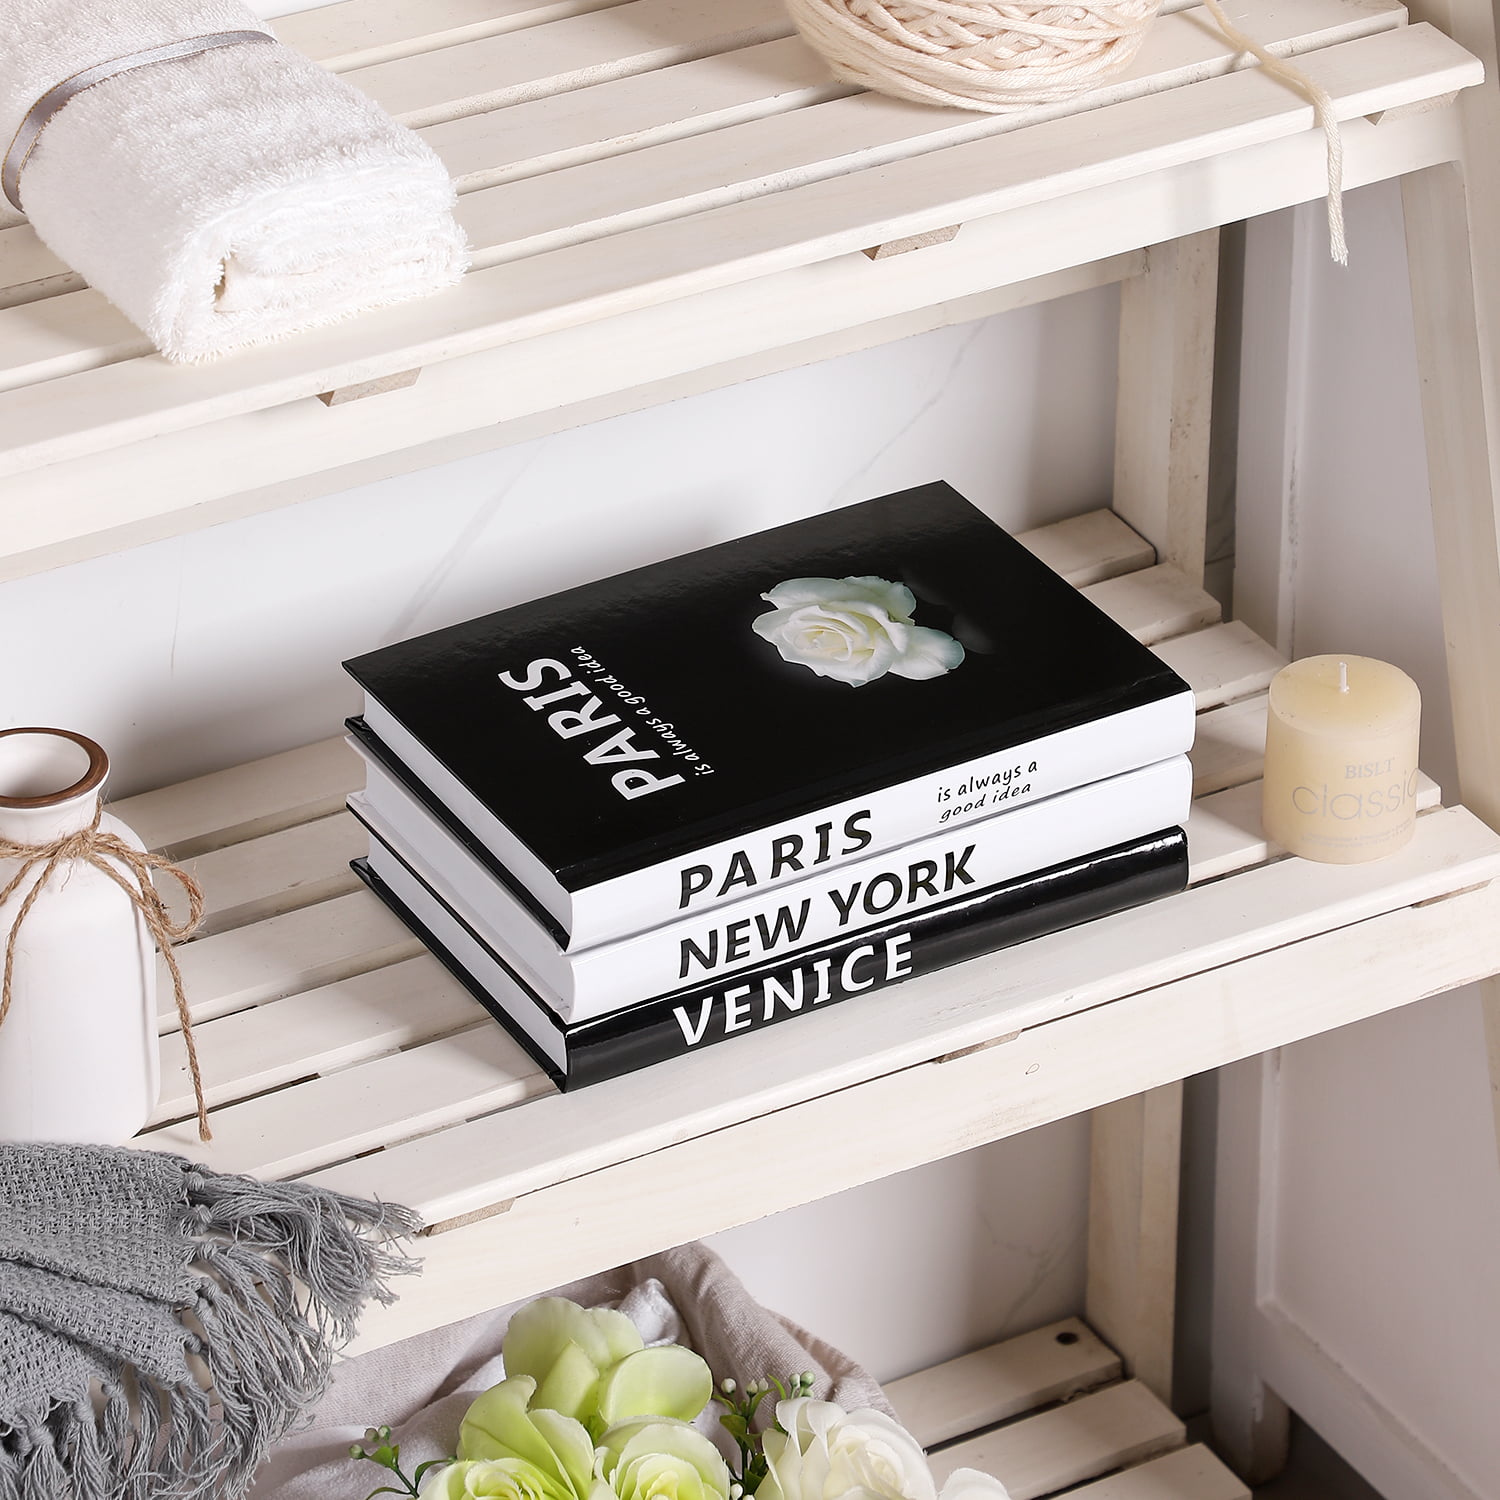  Decorative Books for Home Decor, Decor Books for Coffee Table –  Fashion Designer Book Decor Set of 3, Modern Display Book Stack Shelf  Decor, Small Faux Books for Decoration – Hardcover